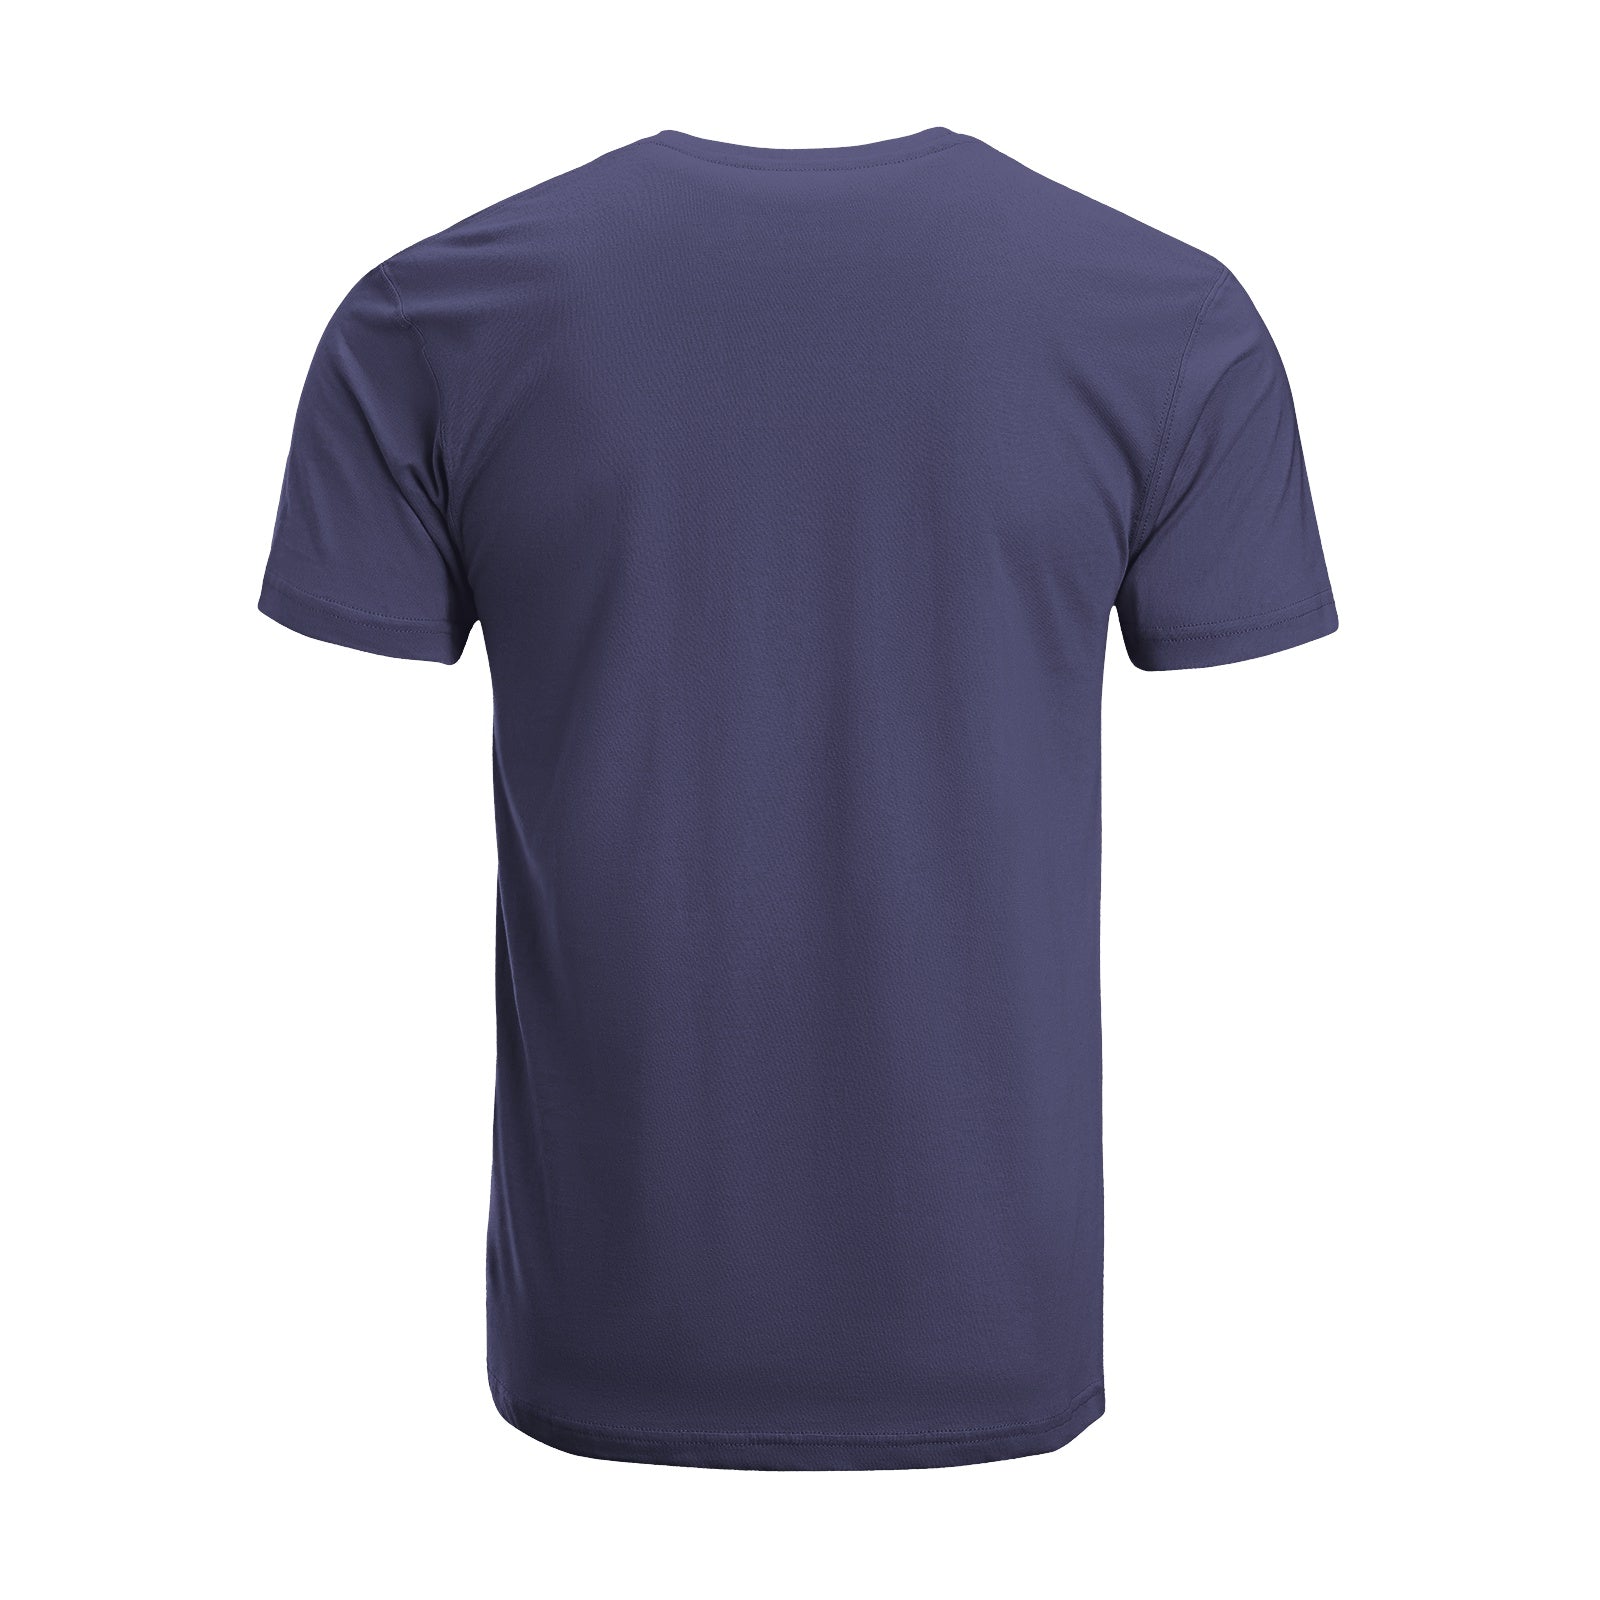 Unisex Short Sleeve Crew Neck Cotton Jersey T-Shirt Gym No. 15 - Tara-Outfits.com